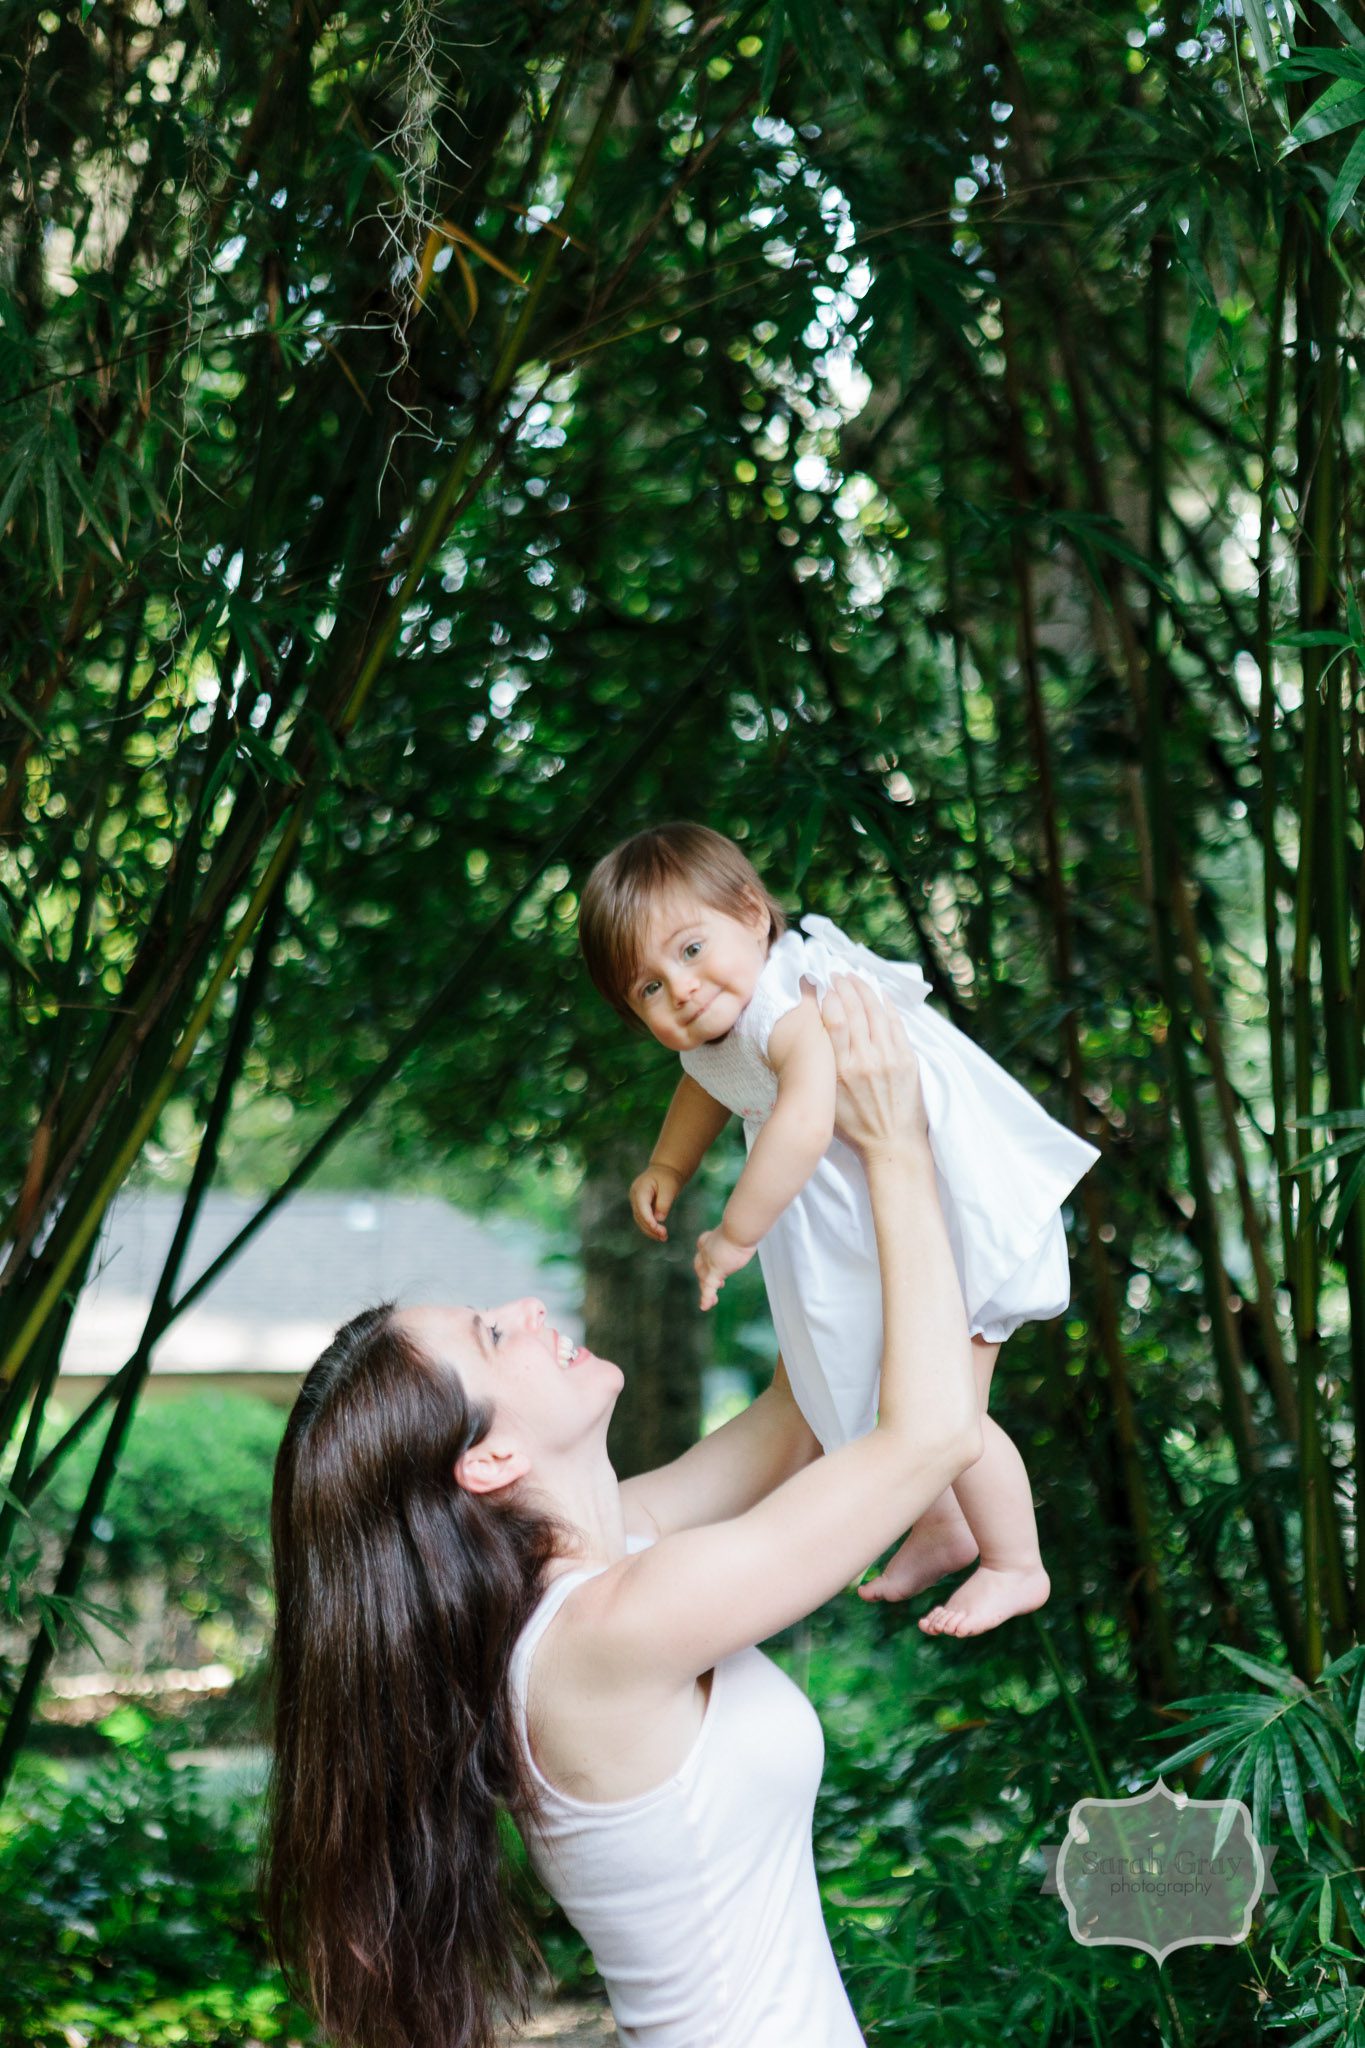 Sarah Gray Photography | Tallahassee baby plan photographer